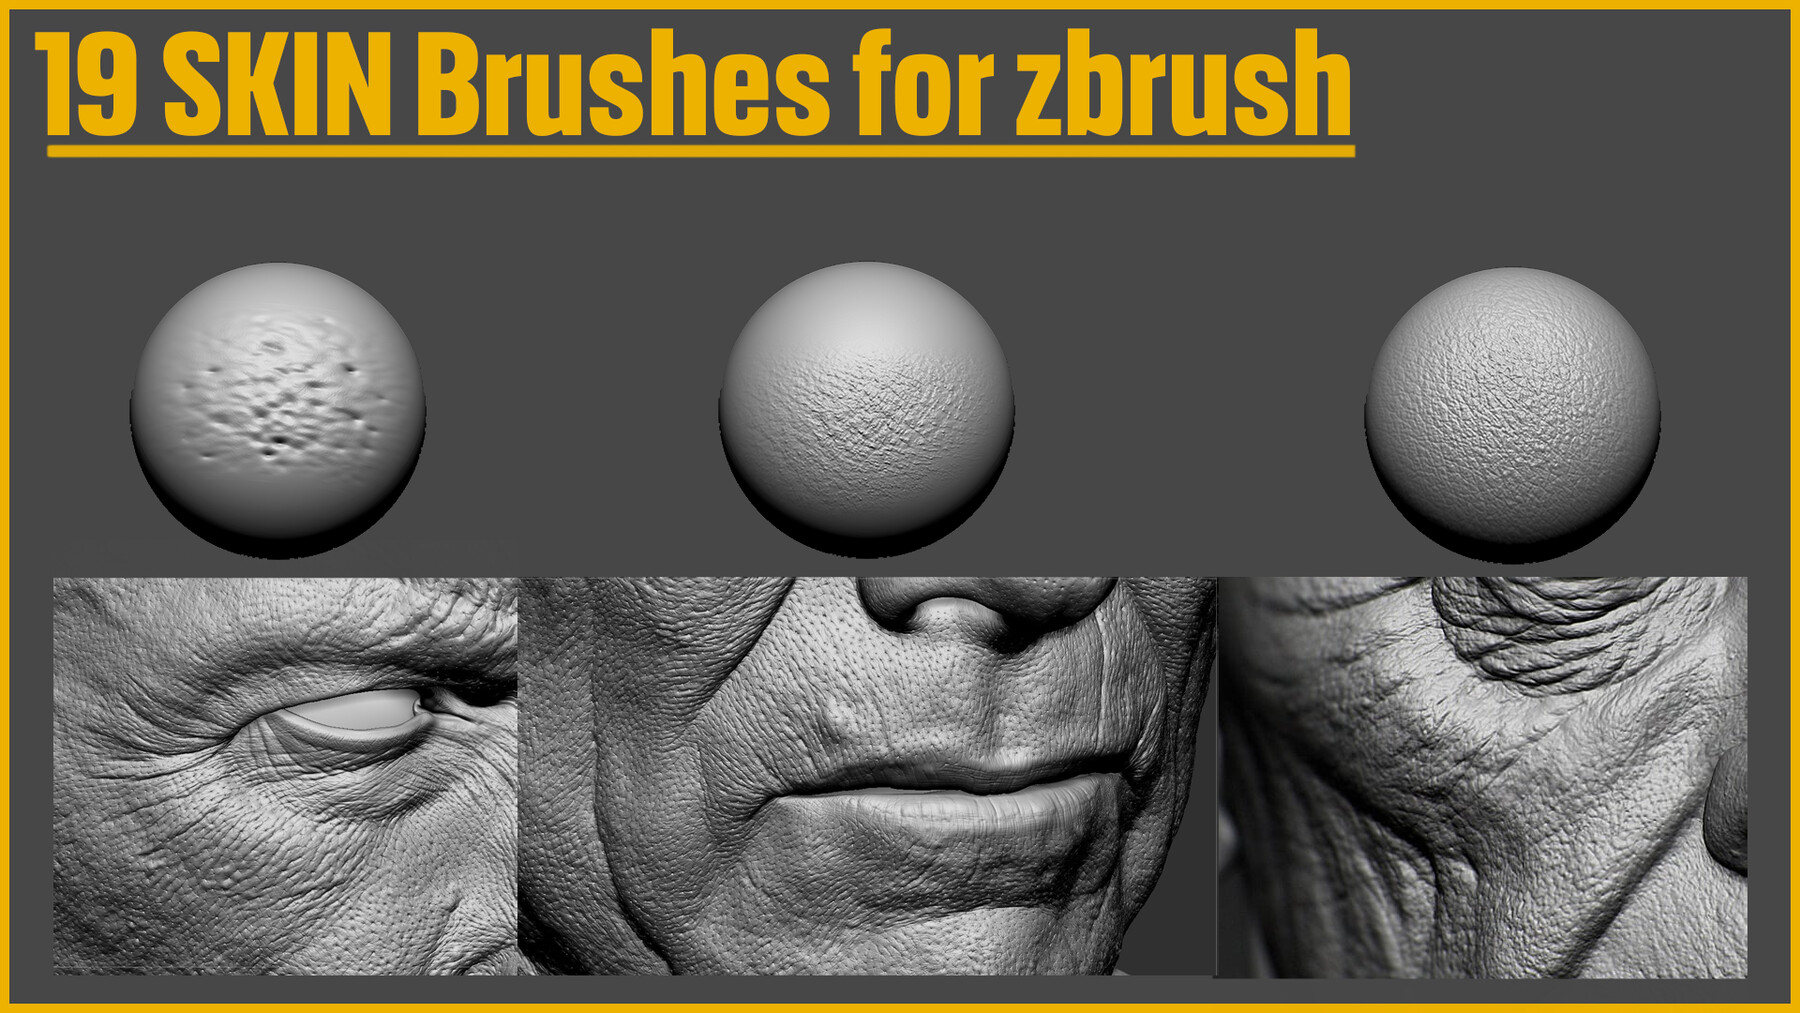 zbrush brush and edit greyed out